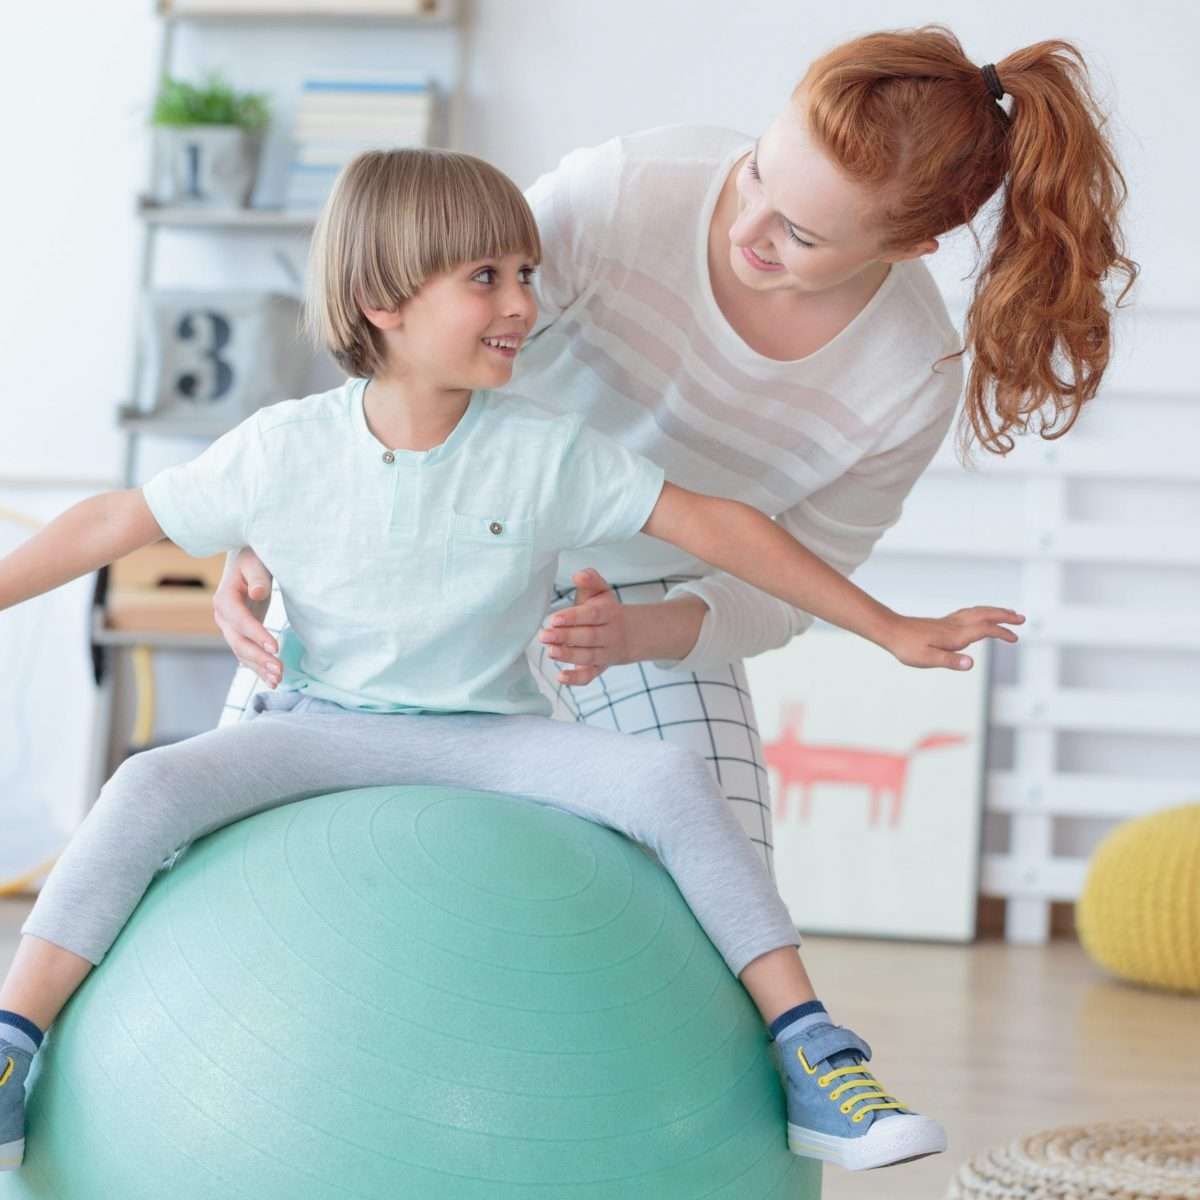 Pediatric Pelvic Floor Therapy Services